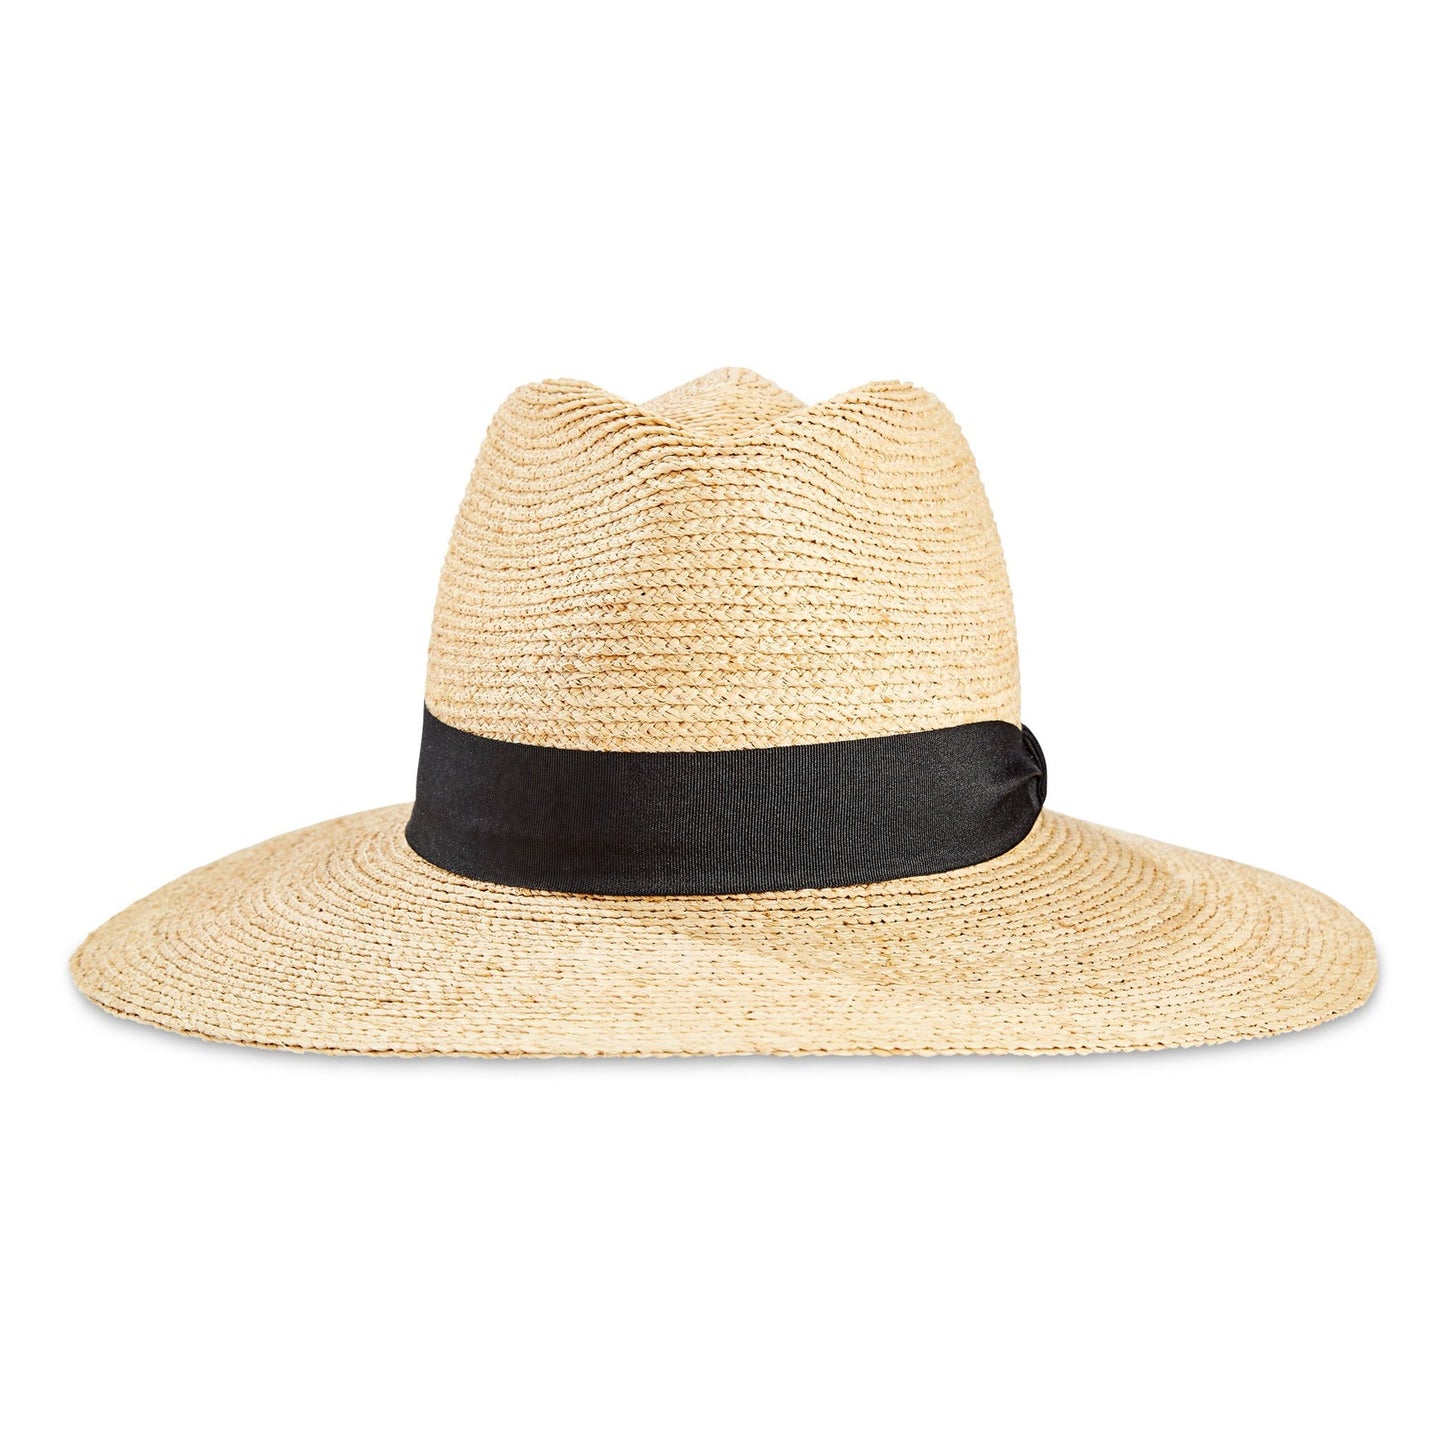 Tilley Women's Panama Wide Brim Hat